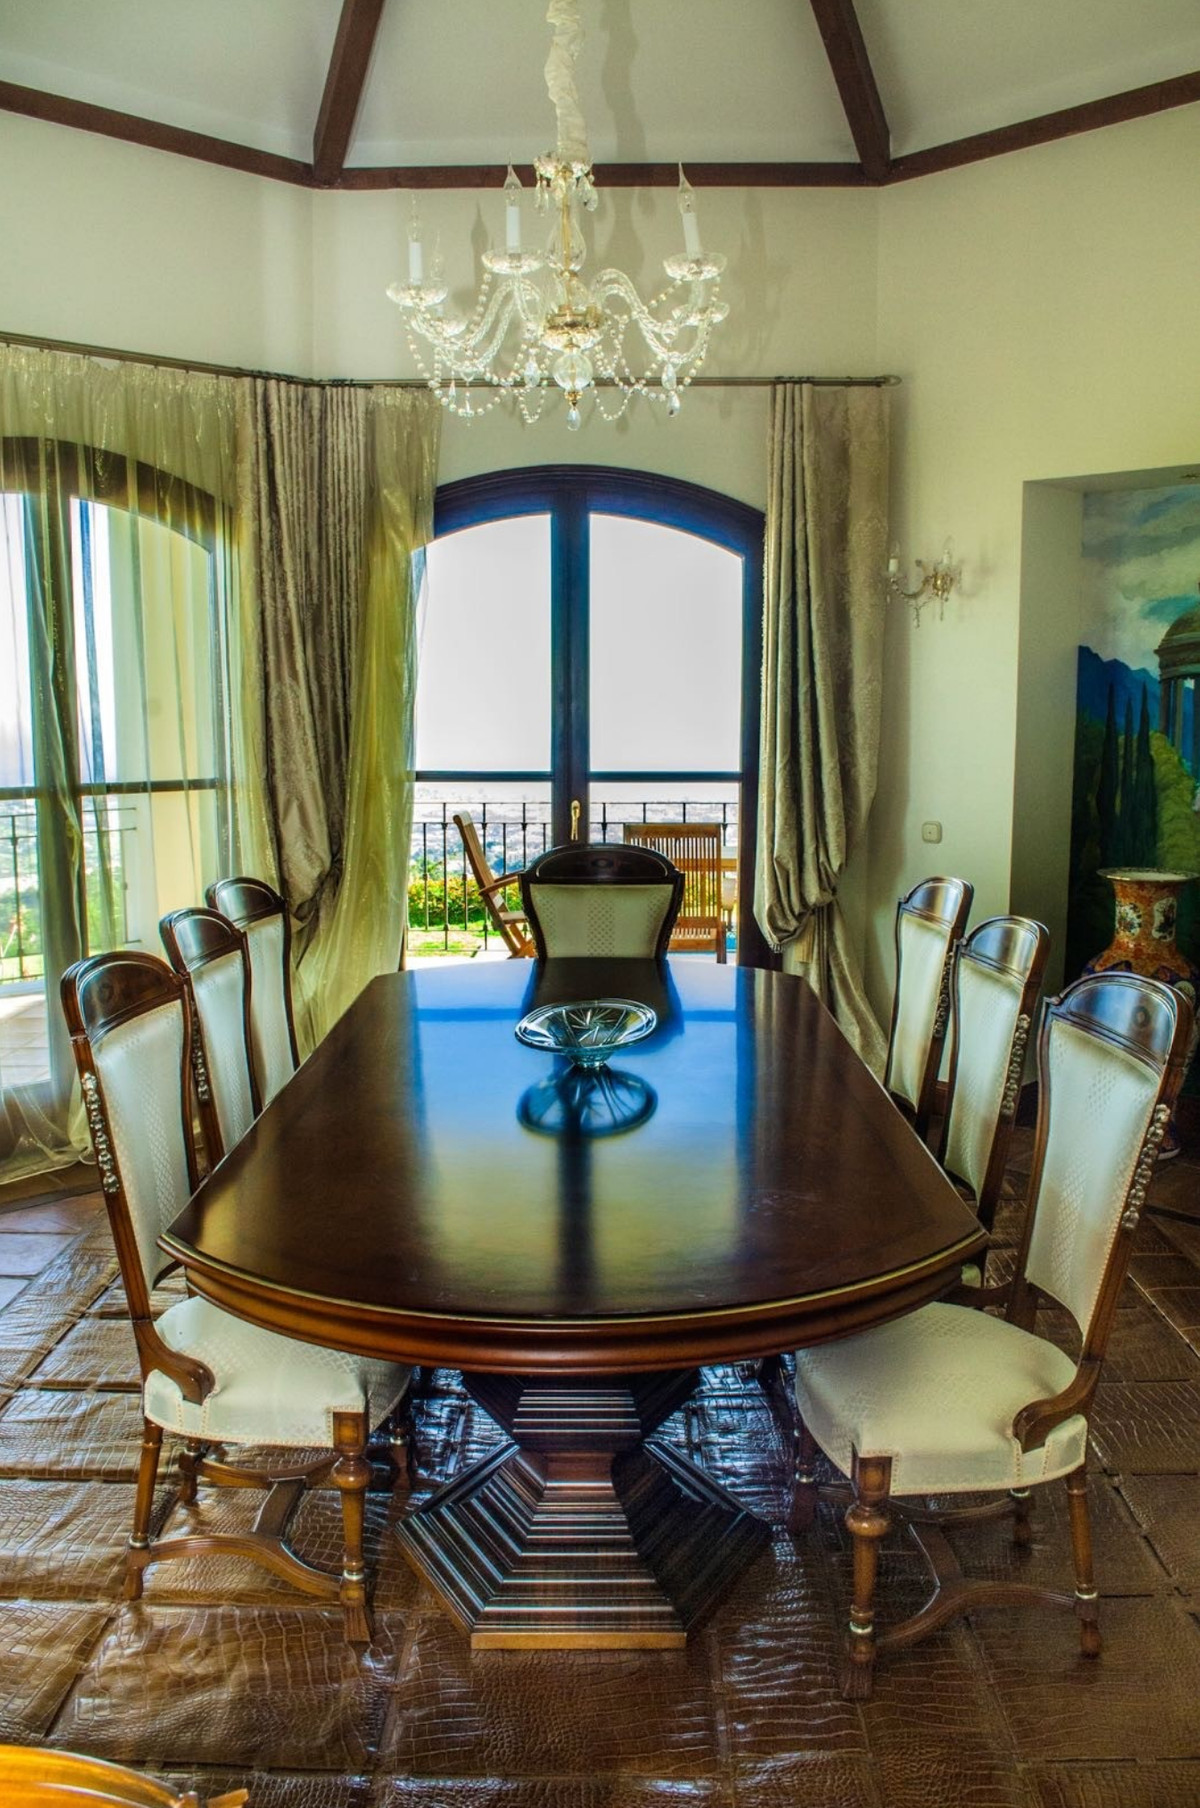 6 Bedroom Villa For Sale - La Zagaleta, Benahavis